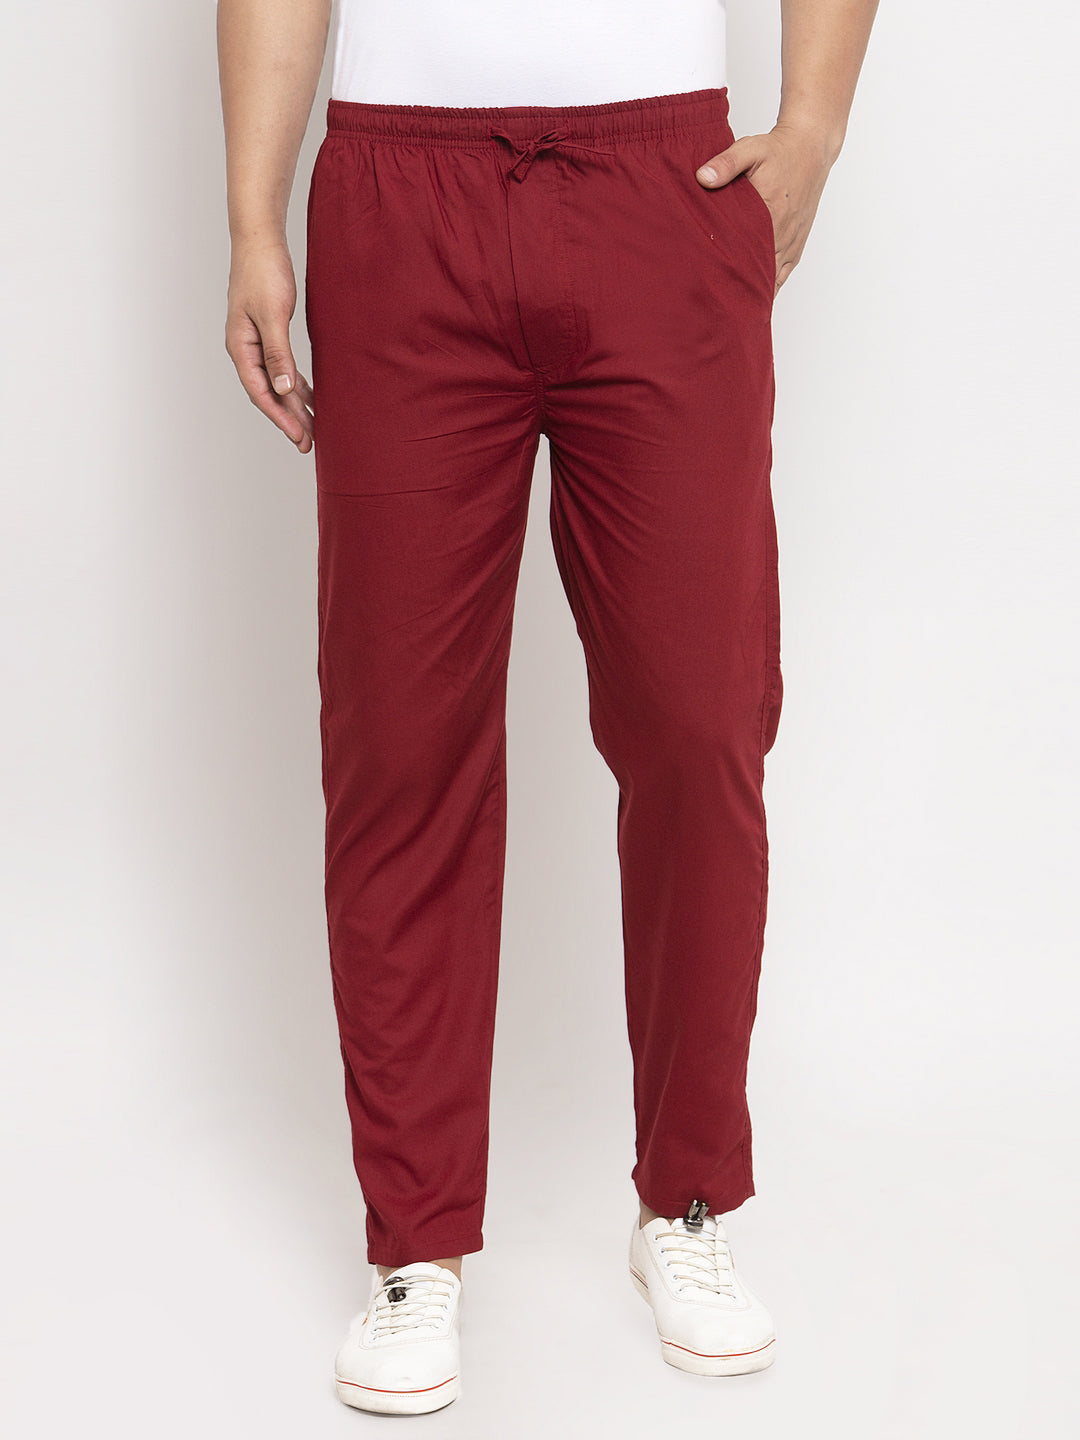 Men's Grey Solid Cotton Track Pants ( JOG 011Grey ) - Jainish | Track pants,  Pants, Wishlist shopping